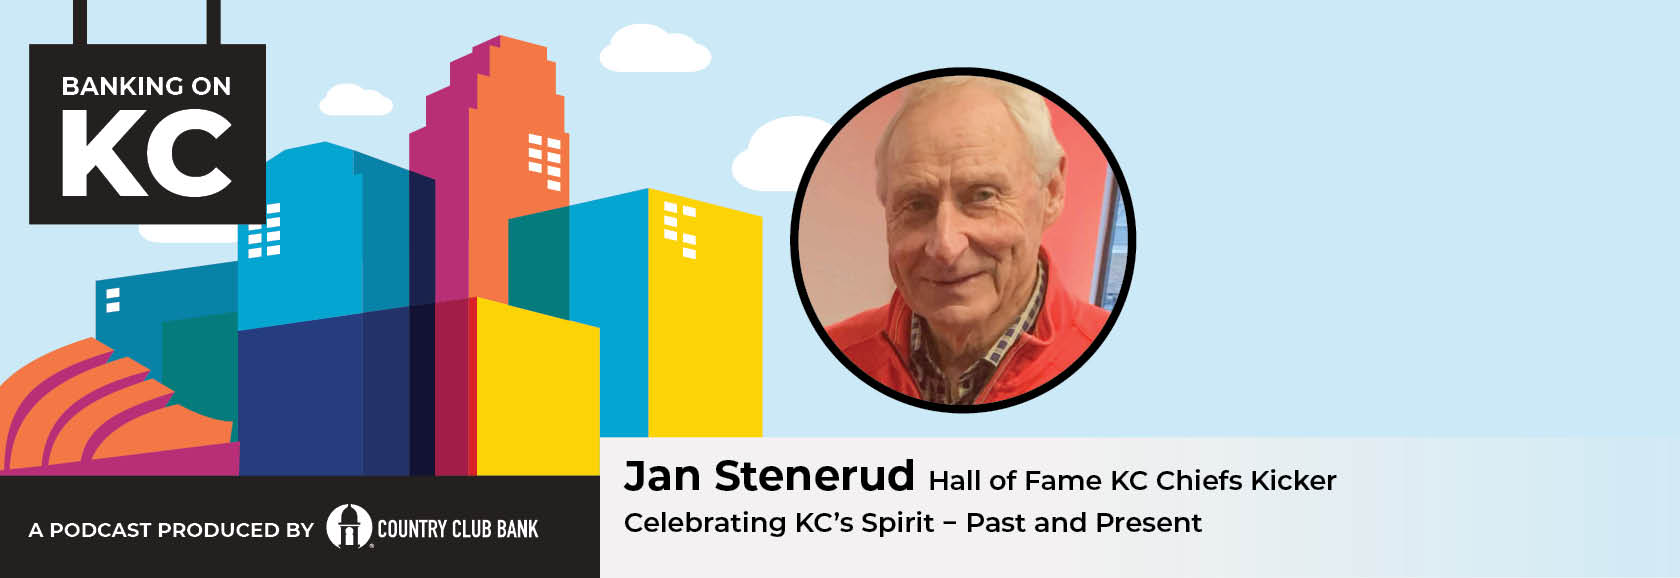 Banking on KC – Jan Stenerud